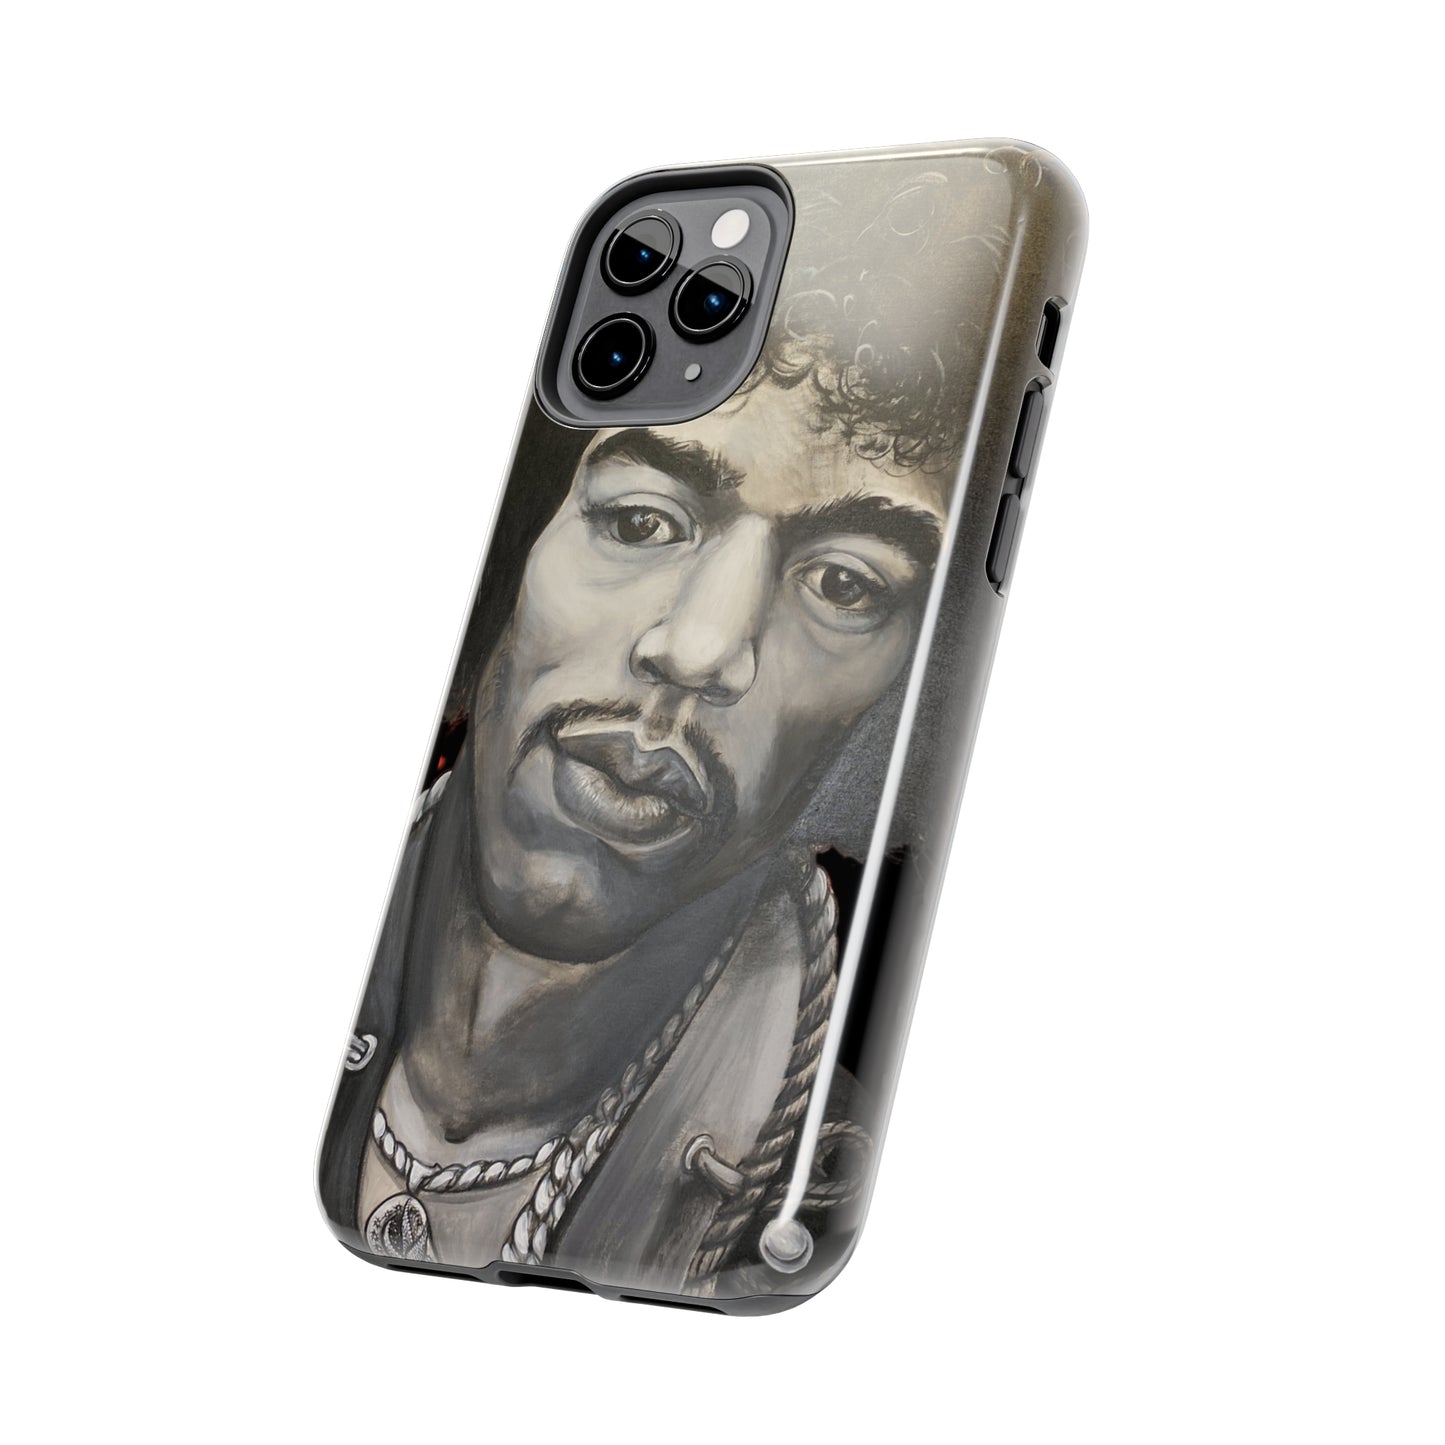 Case Mate Tough Phone Cases Featuring Jimi Hendrix Fan Art